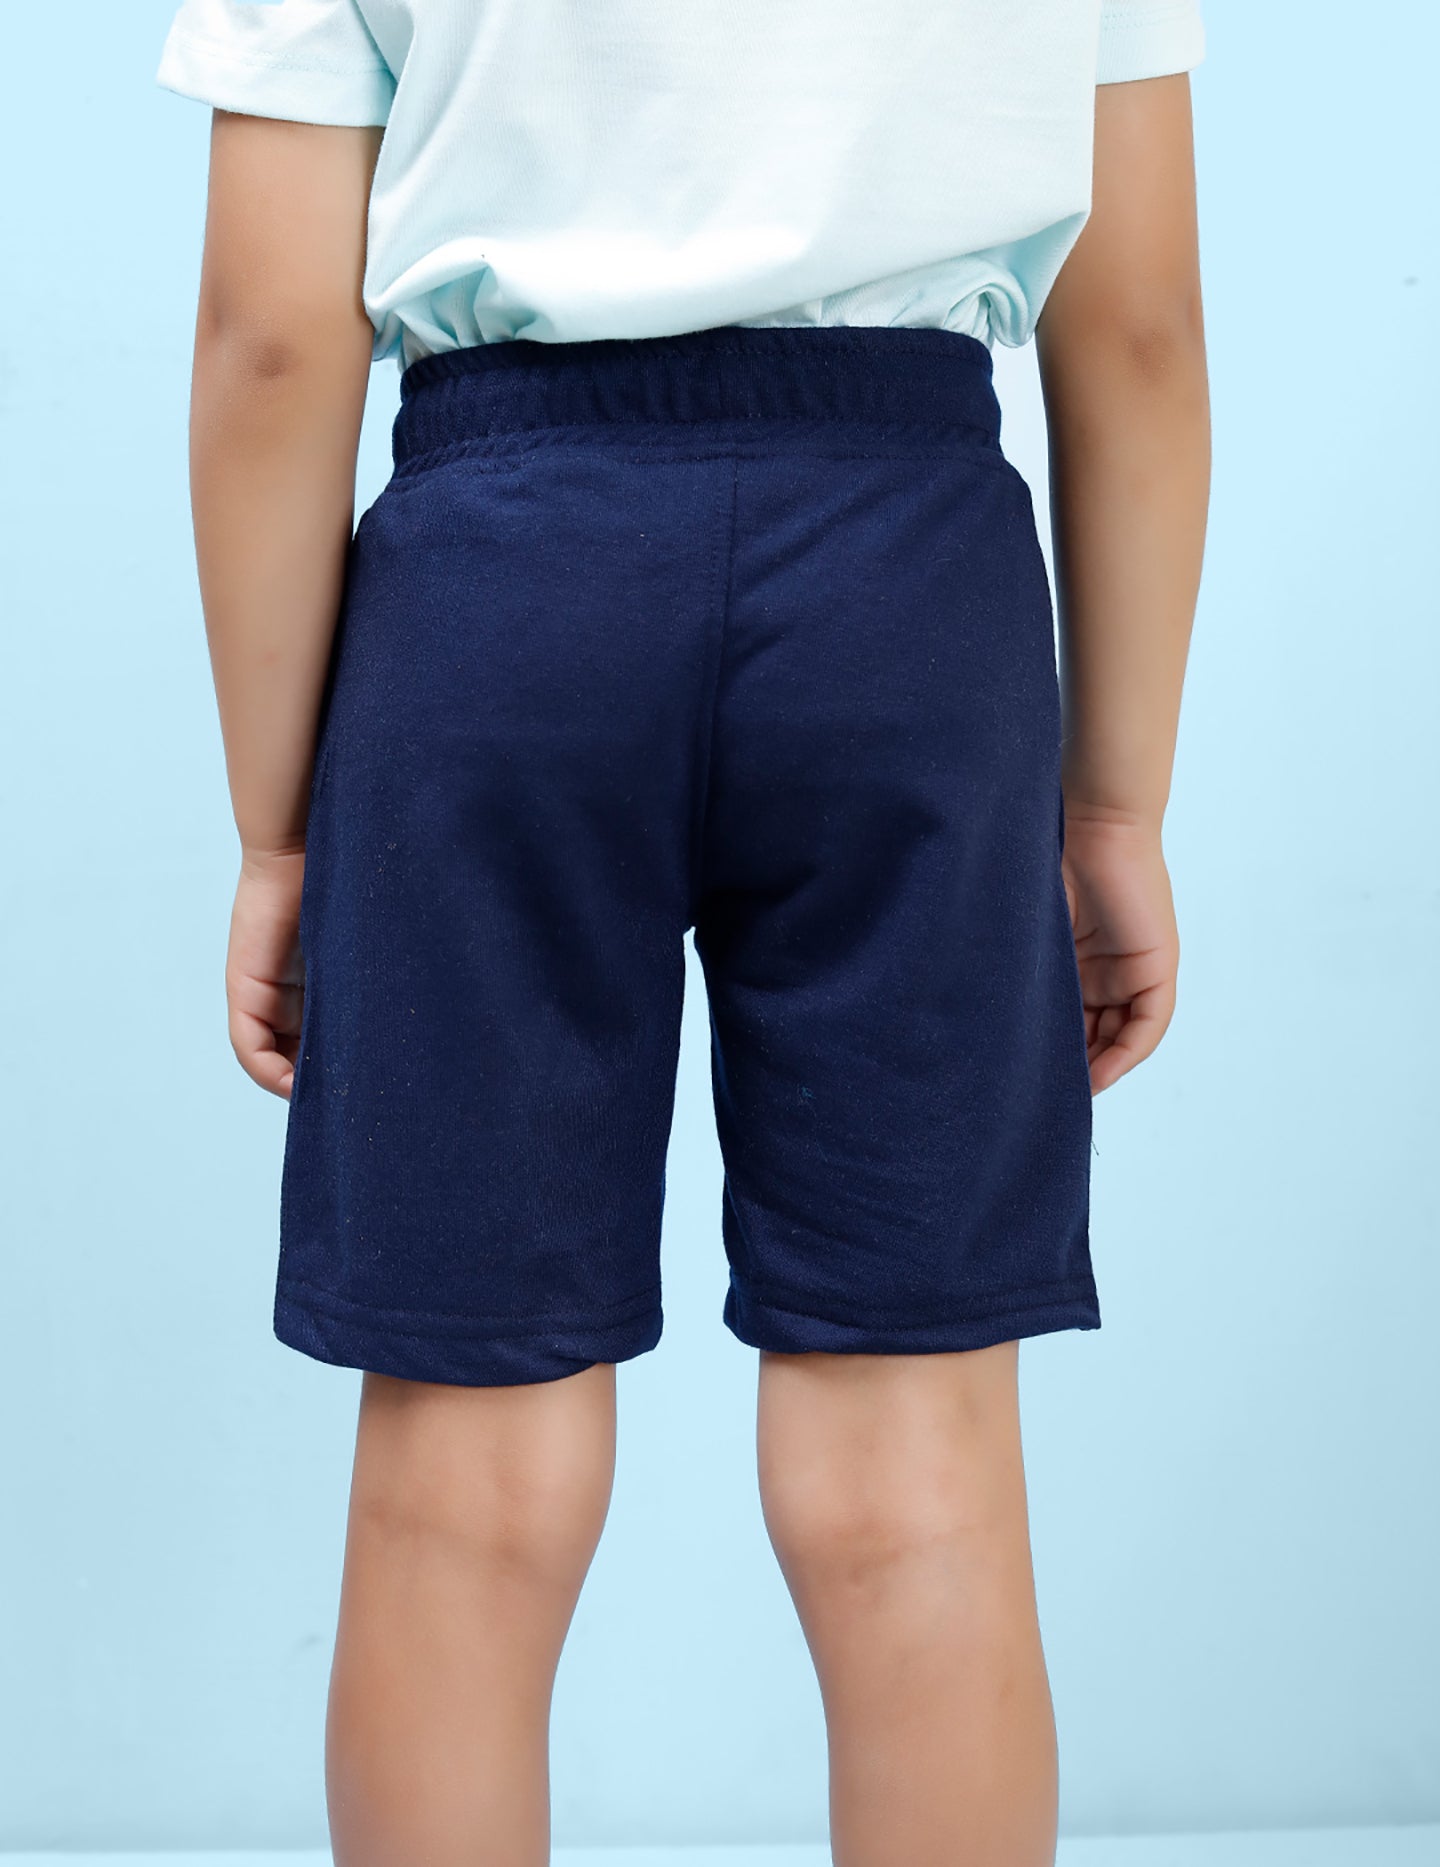 Nusyl Boxes Printed Navy Blue Boys Shorts